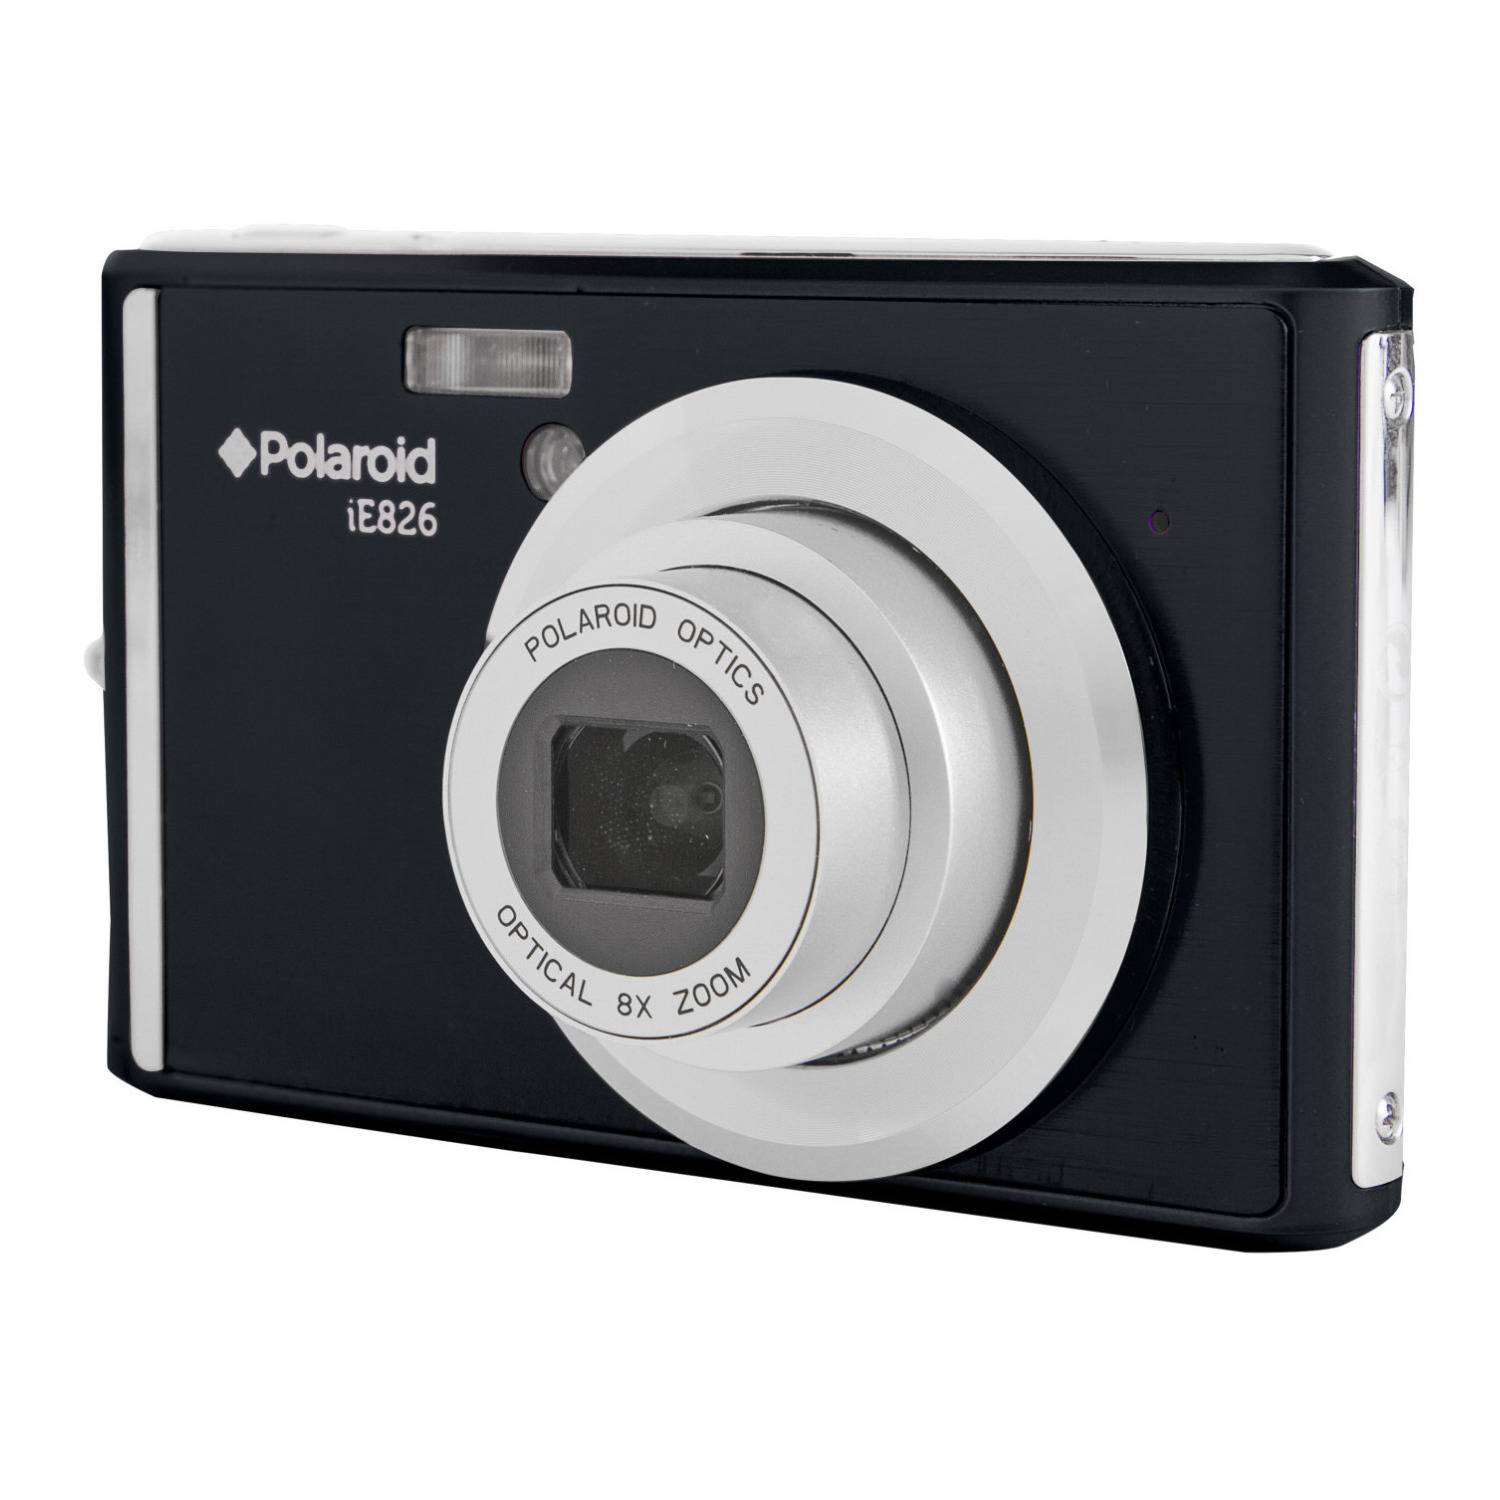 Polaroid iE826 Digital Camera (Black)